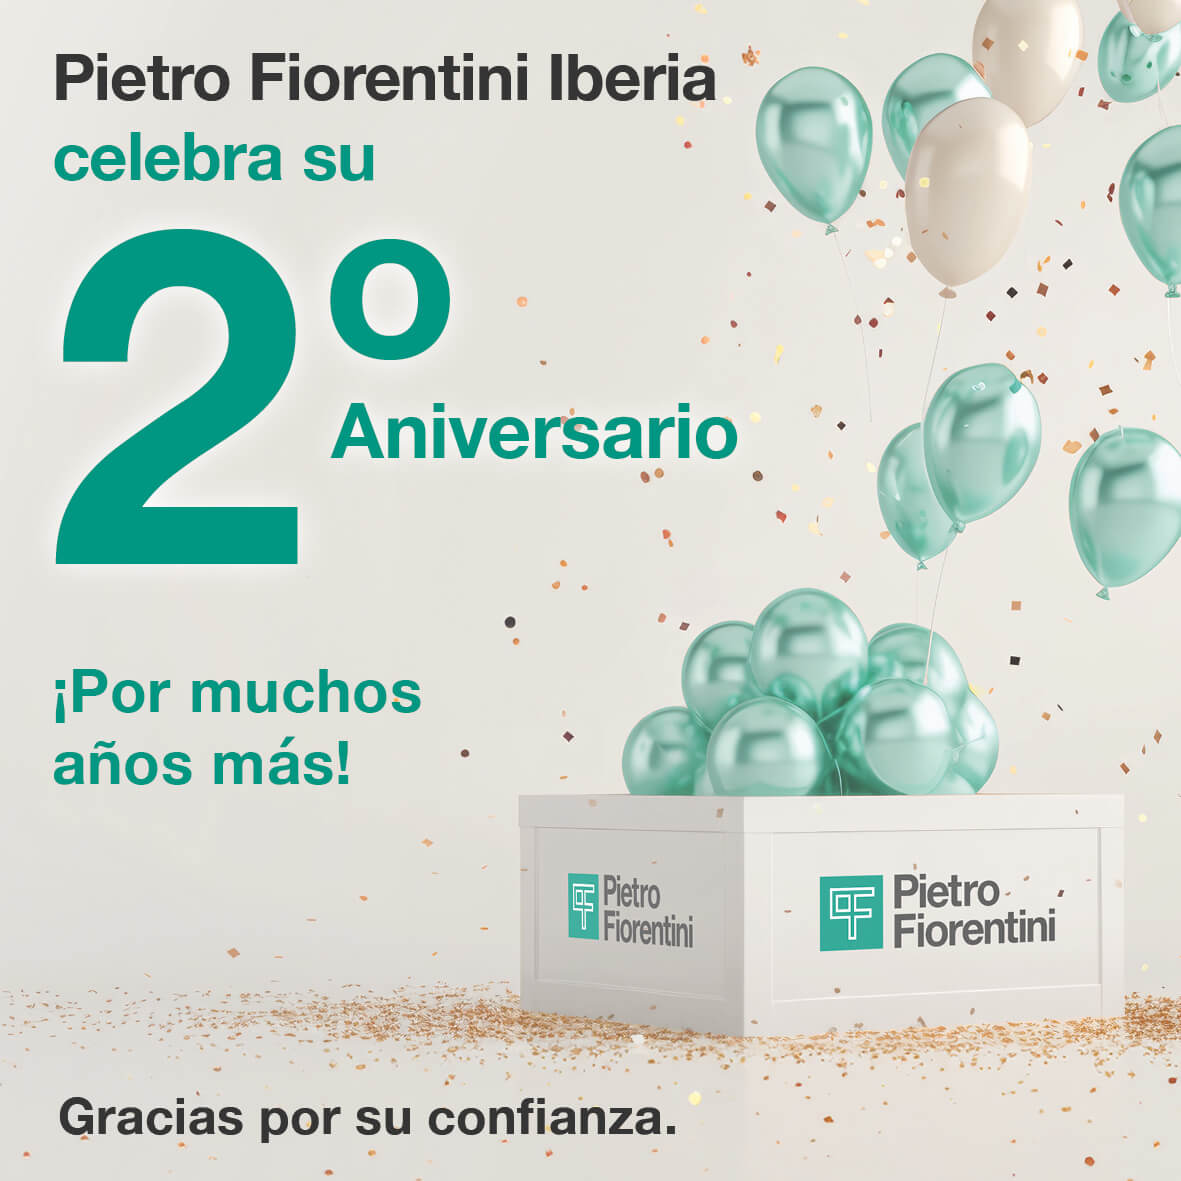 Pietro Fiorentini Iberia celebra su 2º aniversario